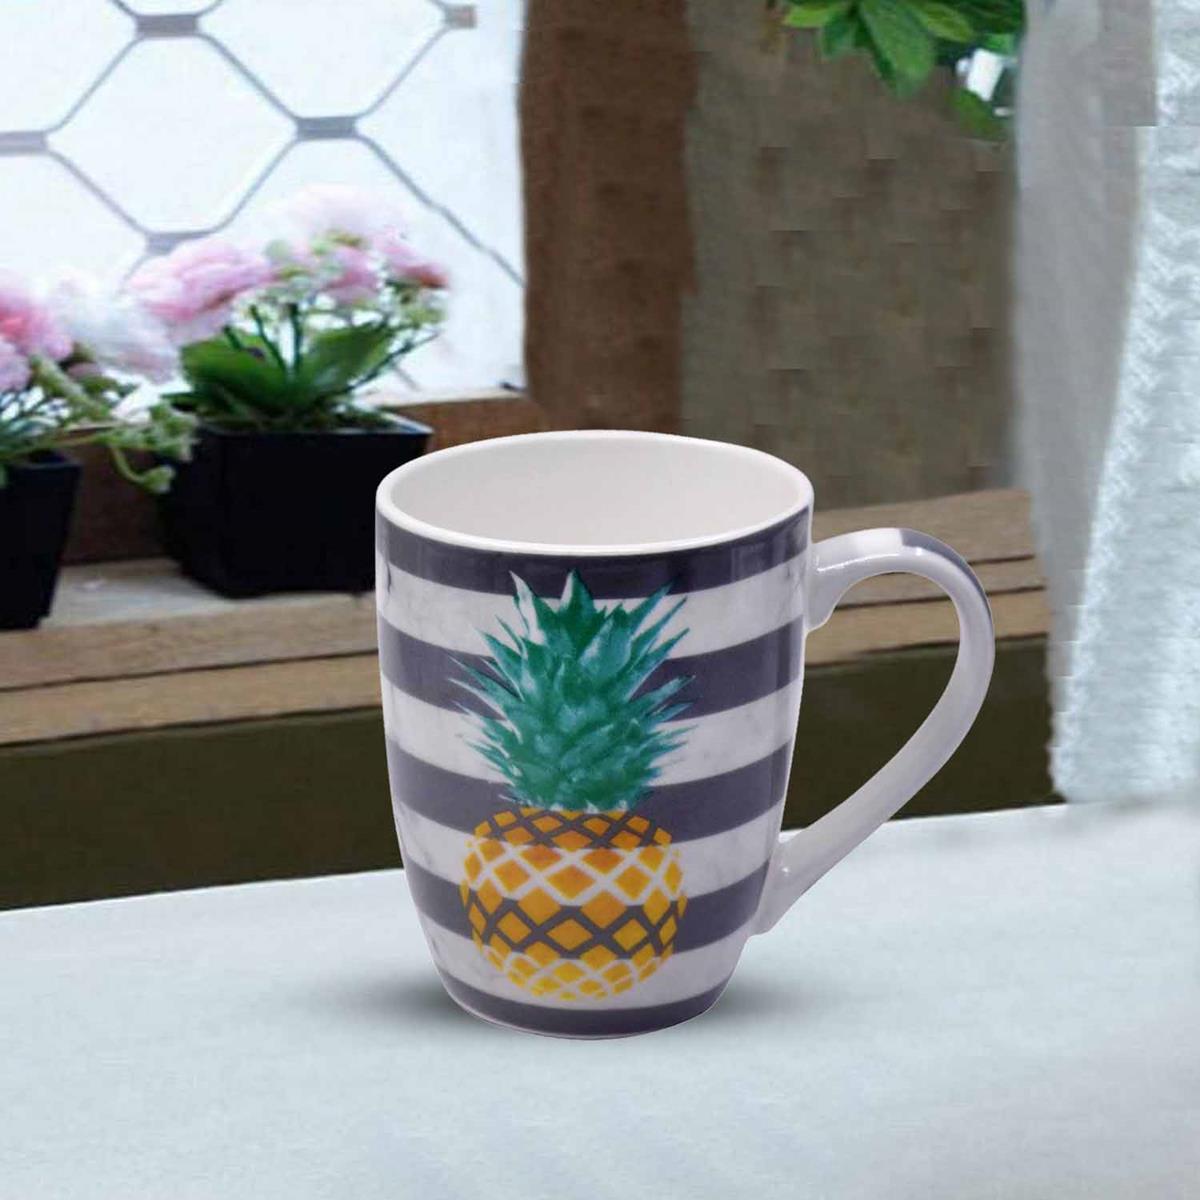 Kookee Printed Ceramic Coffee or Tea Mug with handle for Office, Home or Gifting - 325ml (3551-A)